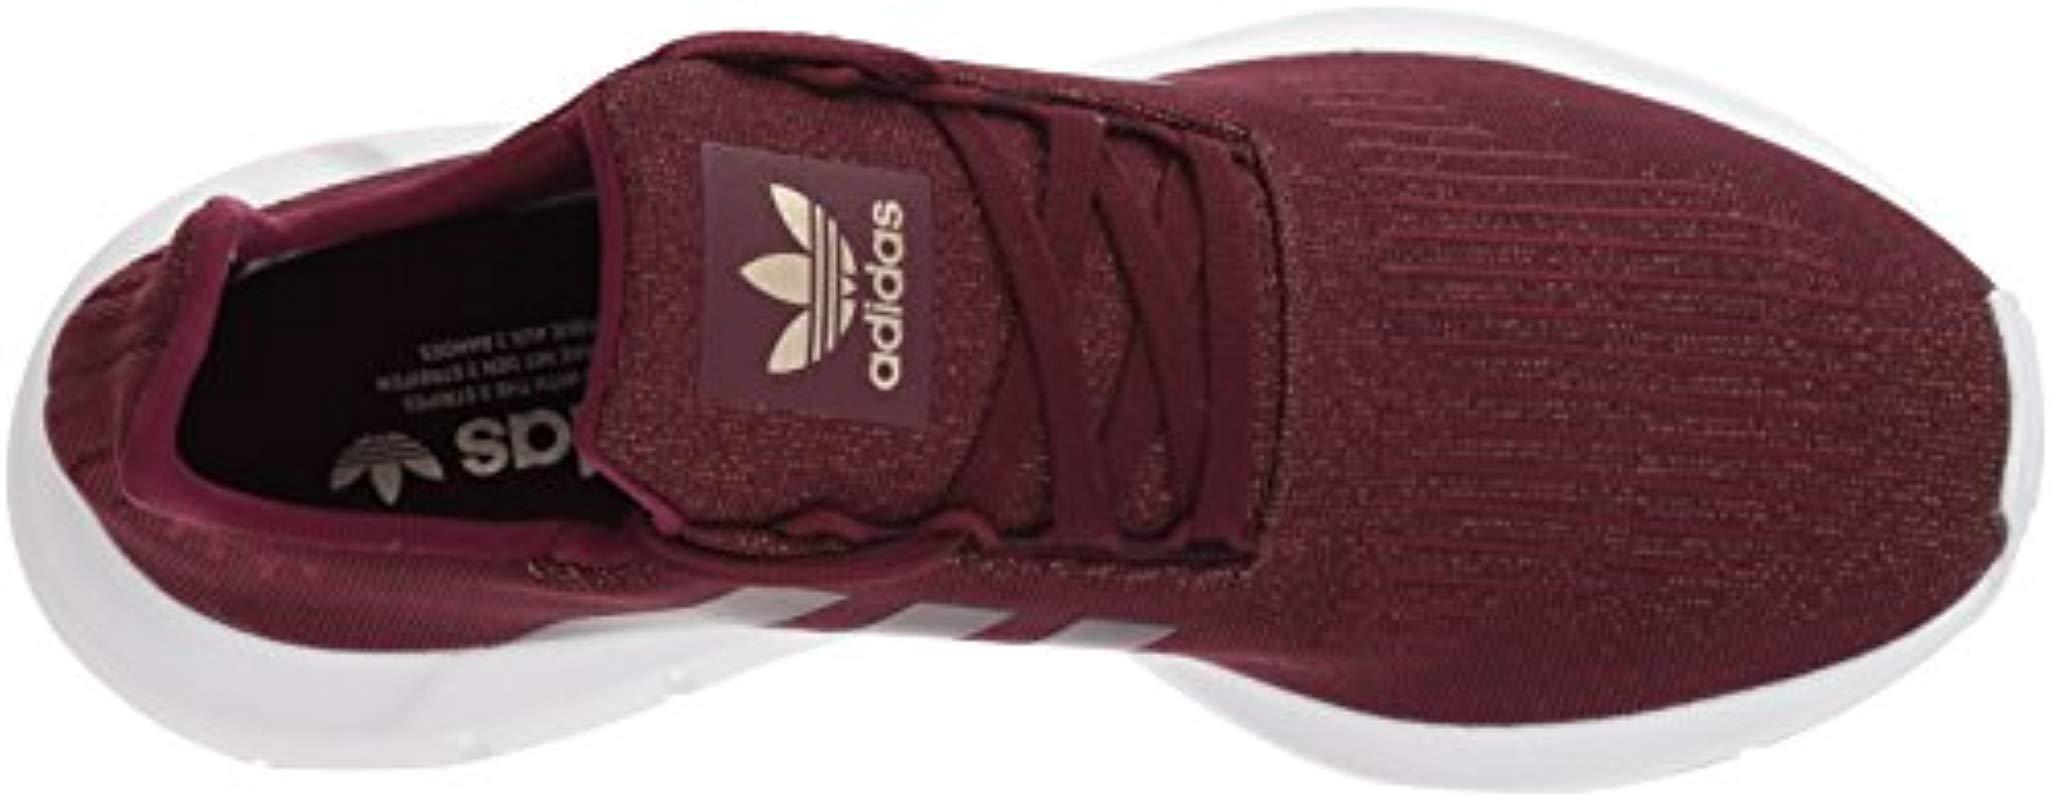 adidas Originals Swift W Running-shoes Cq2017 Maroon/maroon/ftwwht in  Purple | Lyst